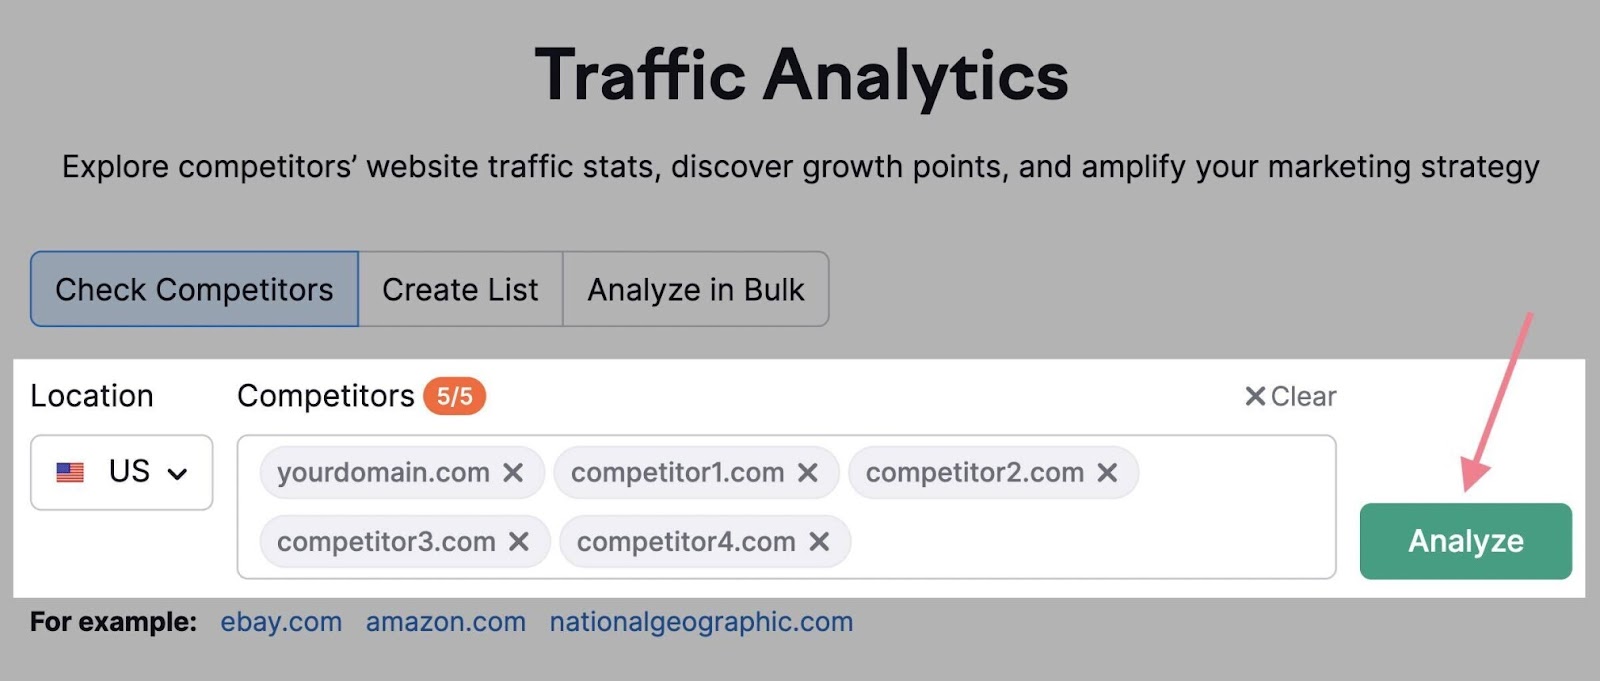 traffic analytics compare competitors